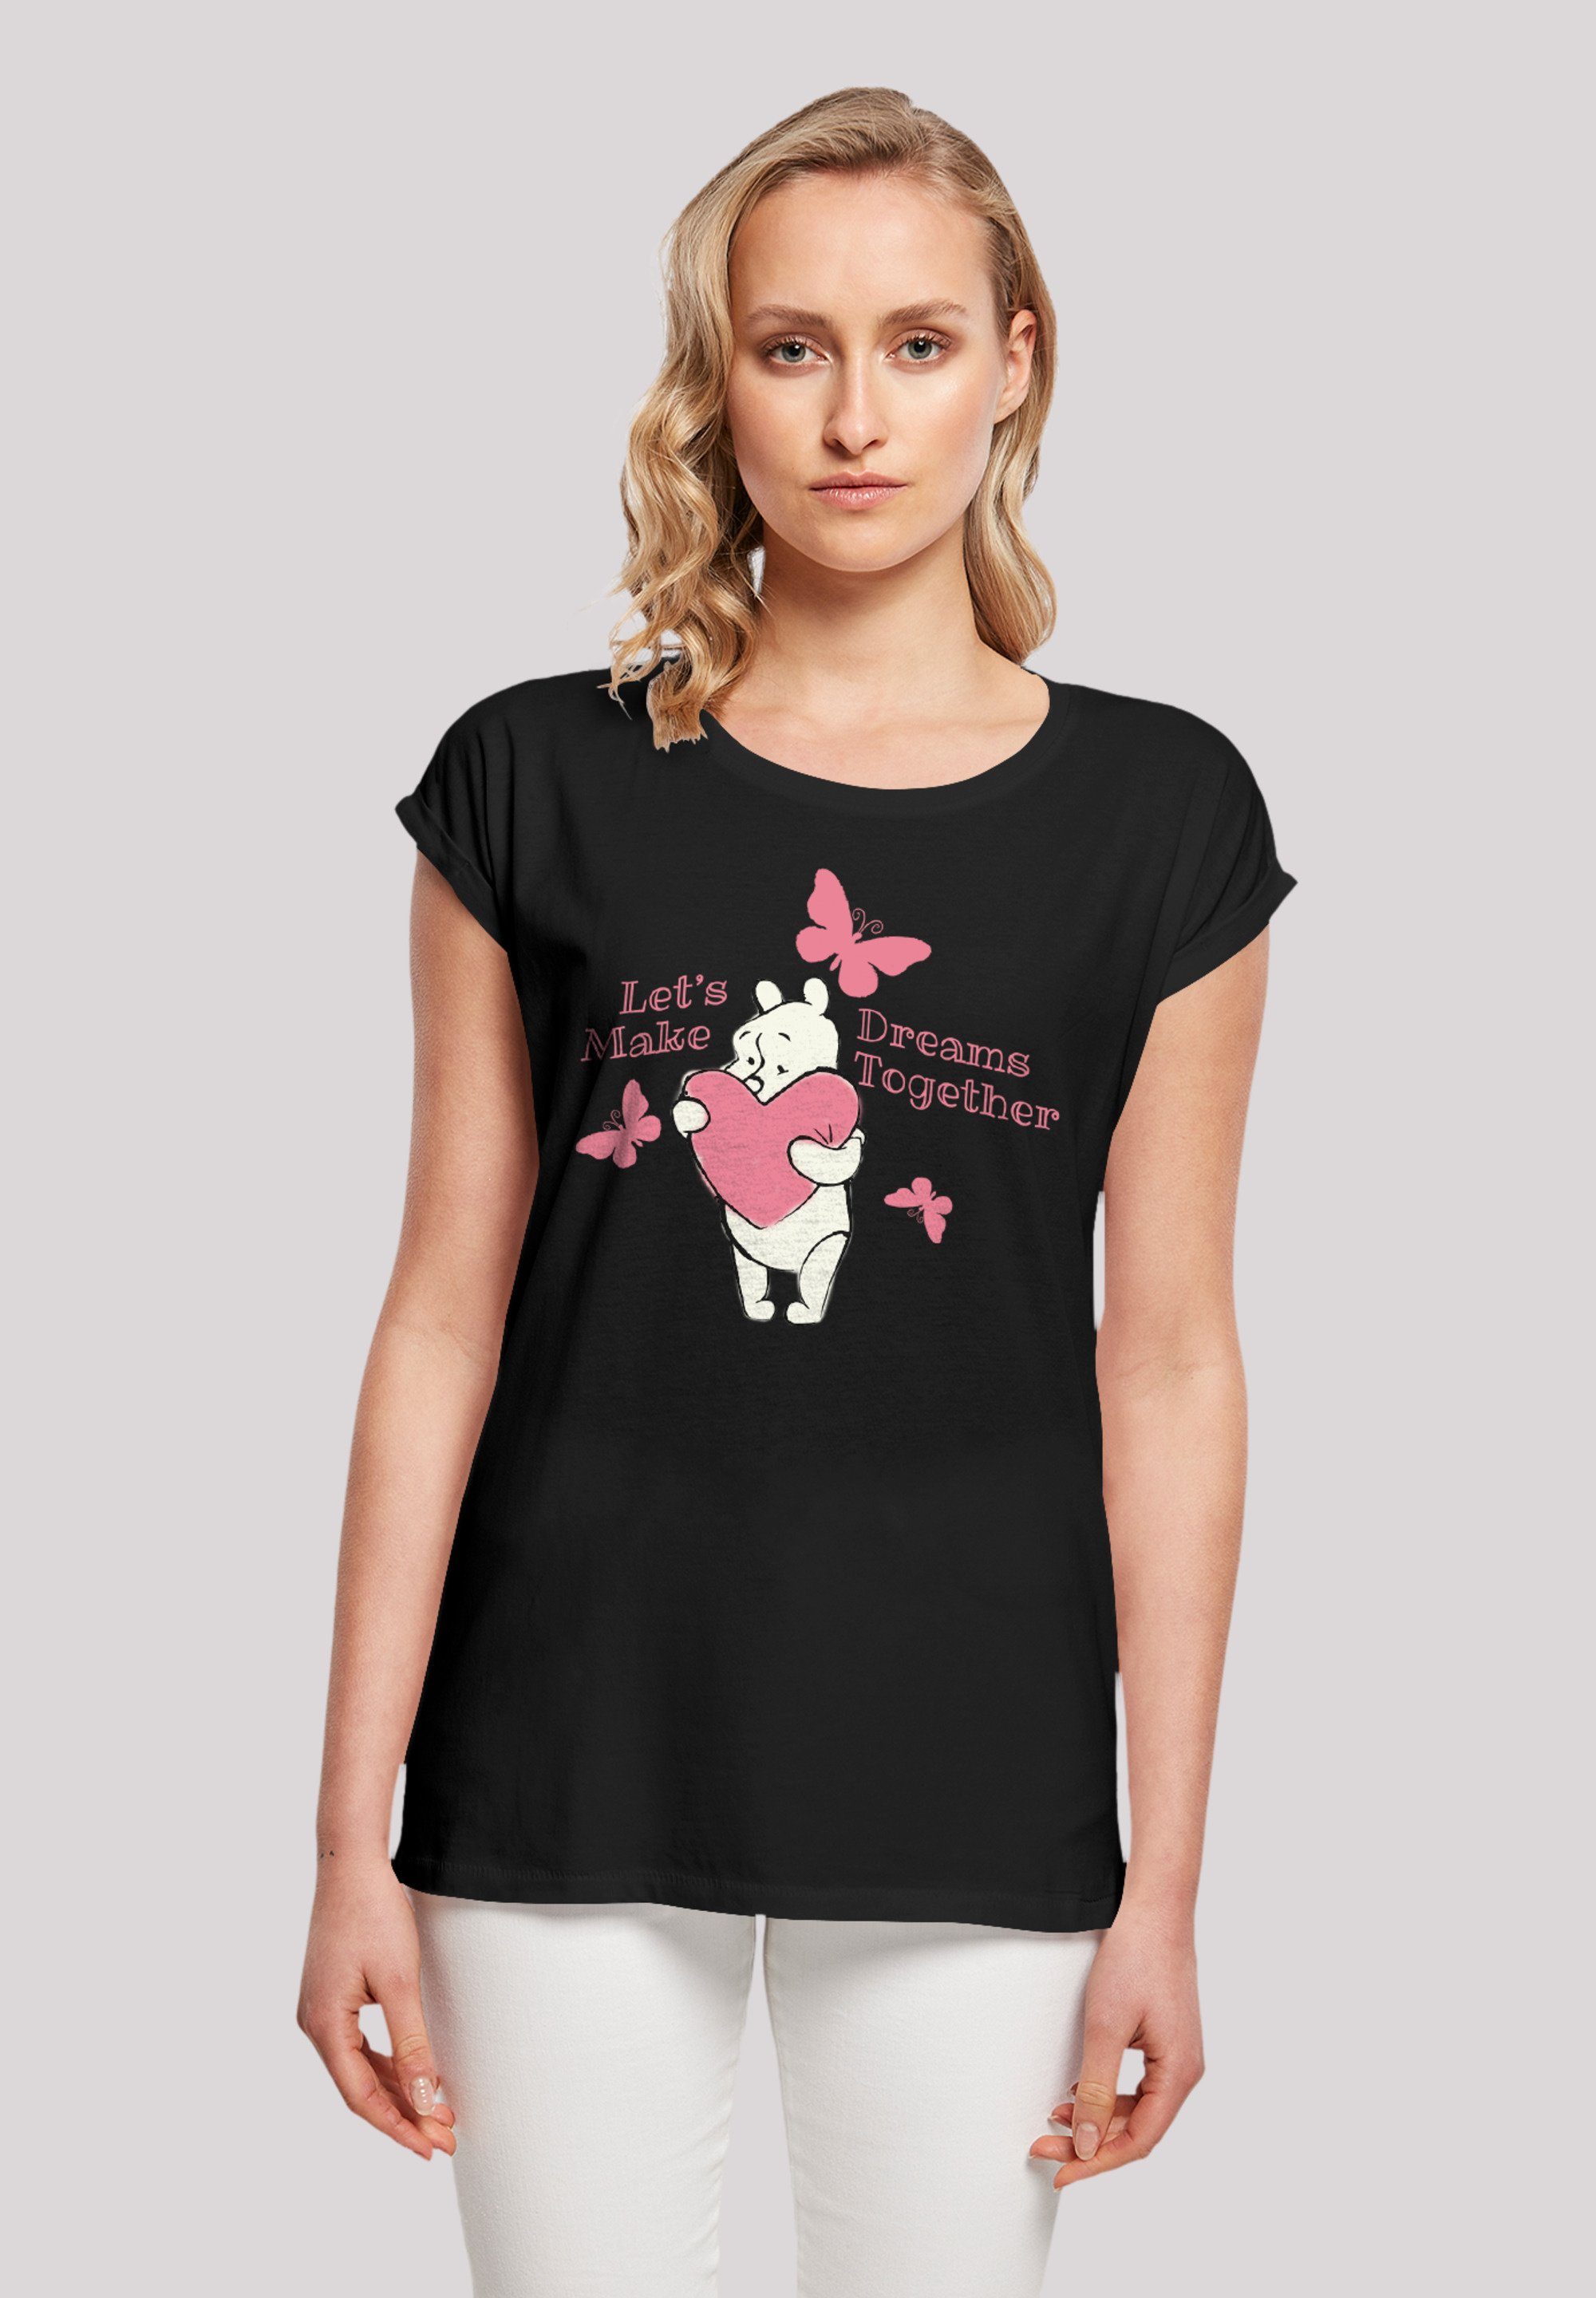 Winnie Dreams Together Qualität Premium Disney T-Shirt Make Puuh F4NT4STIC Let's